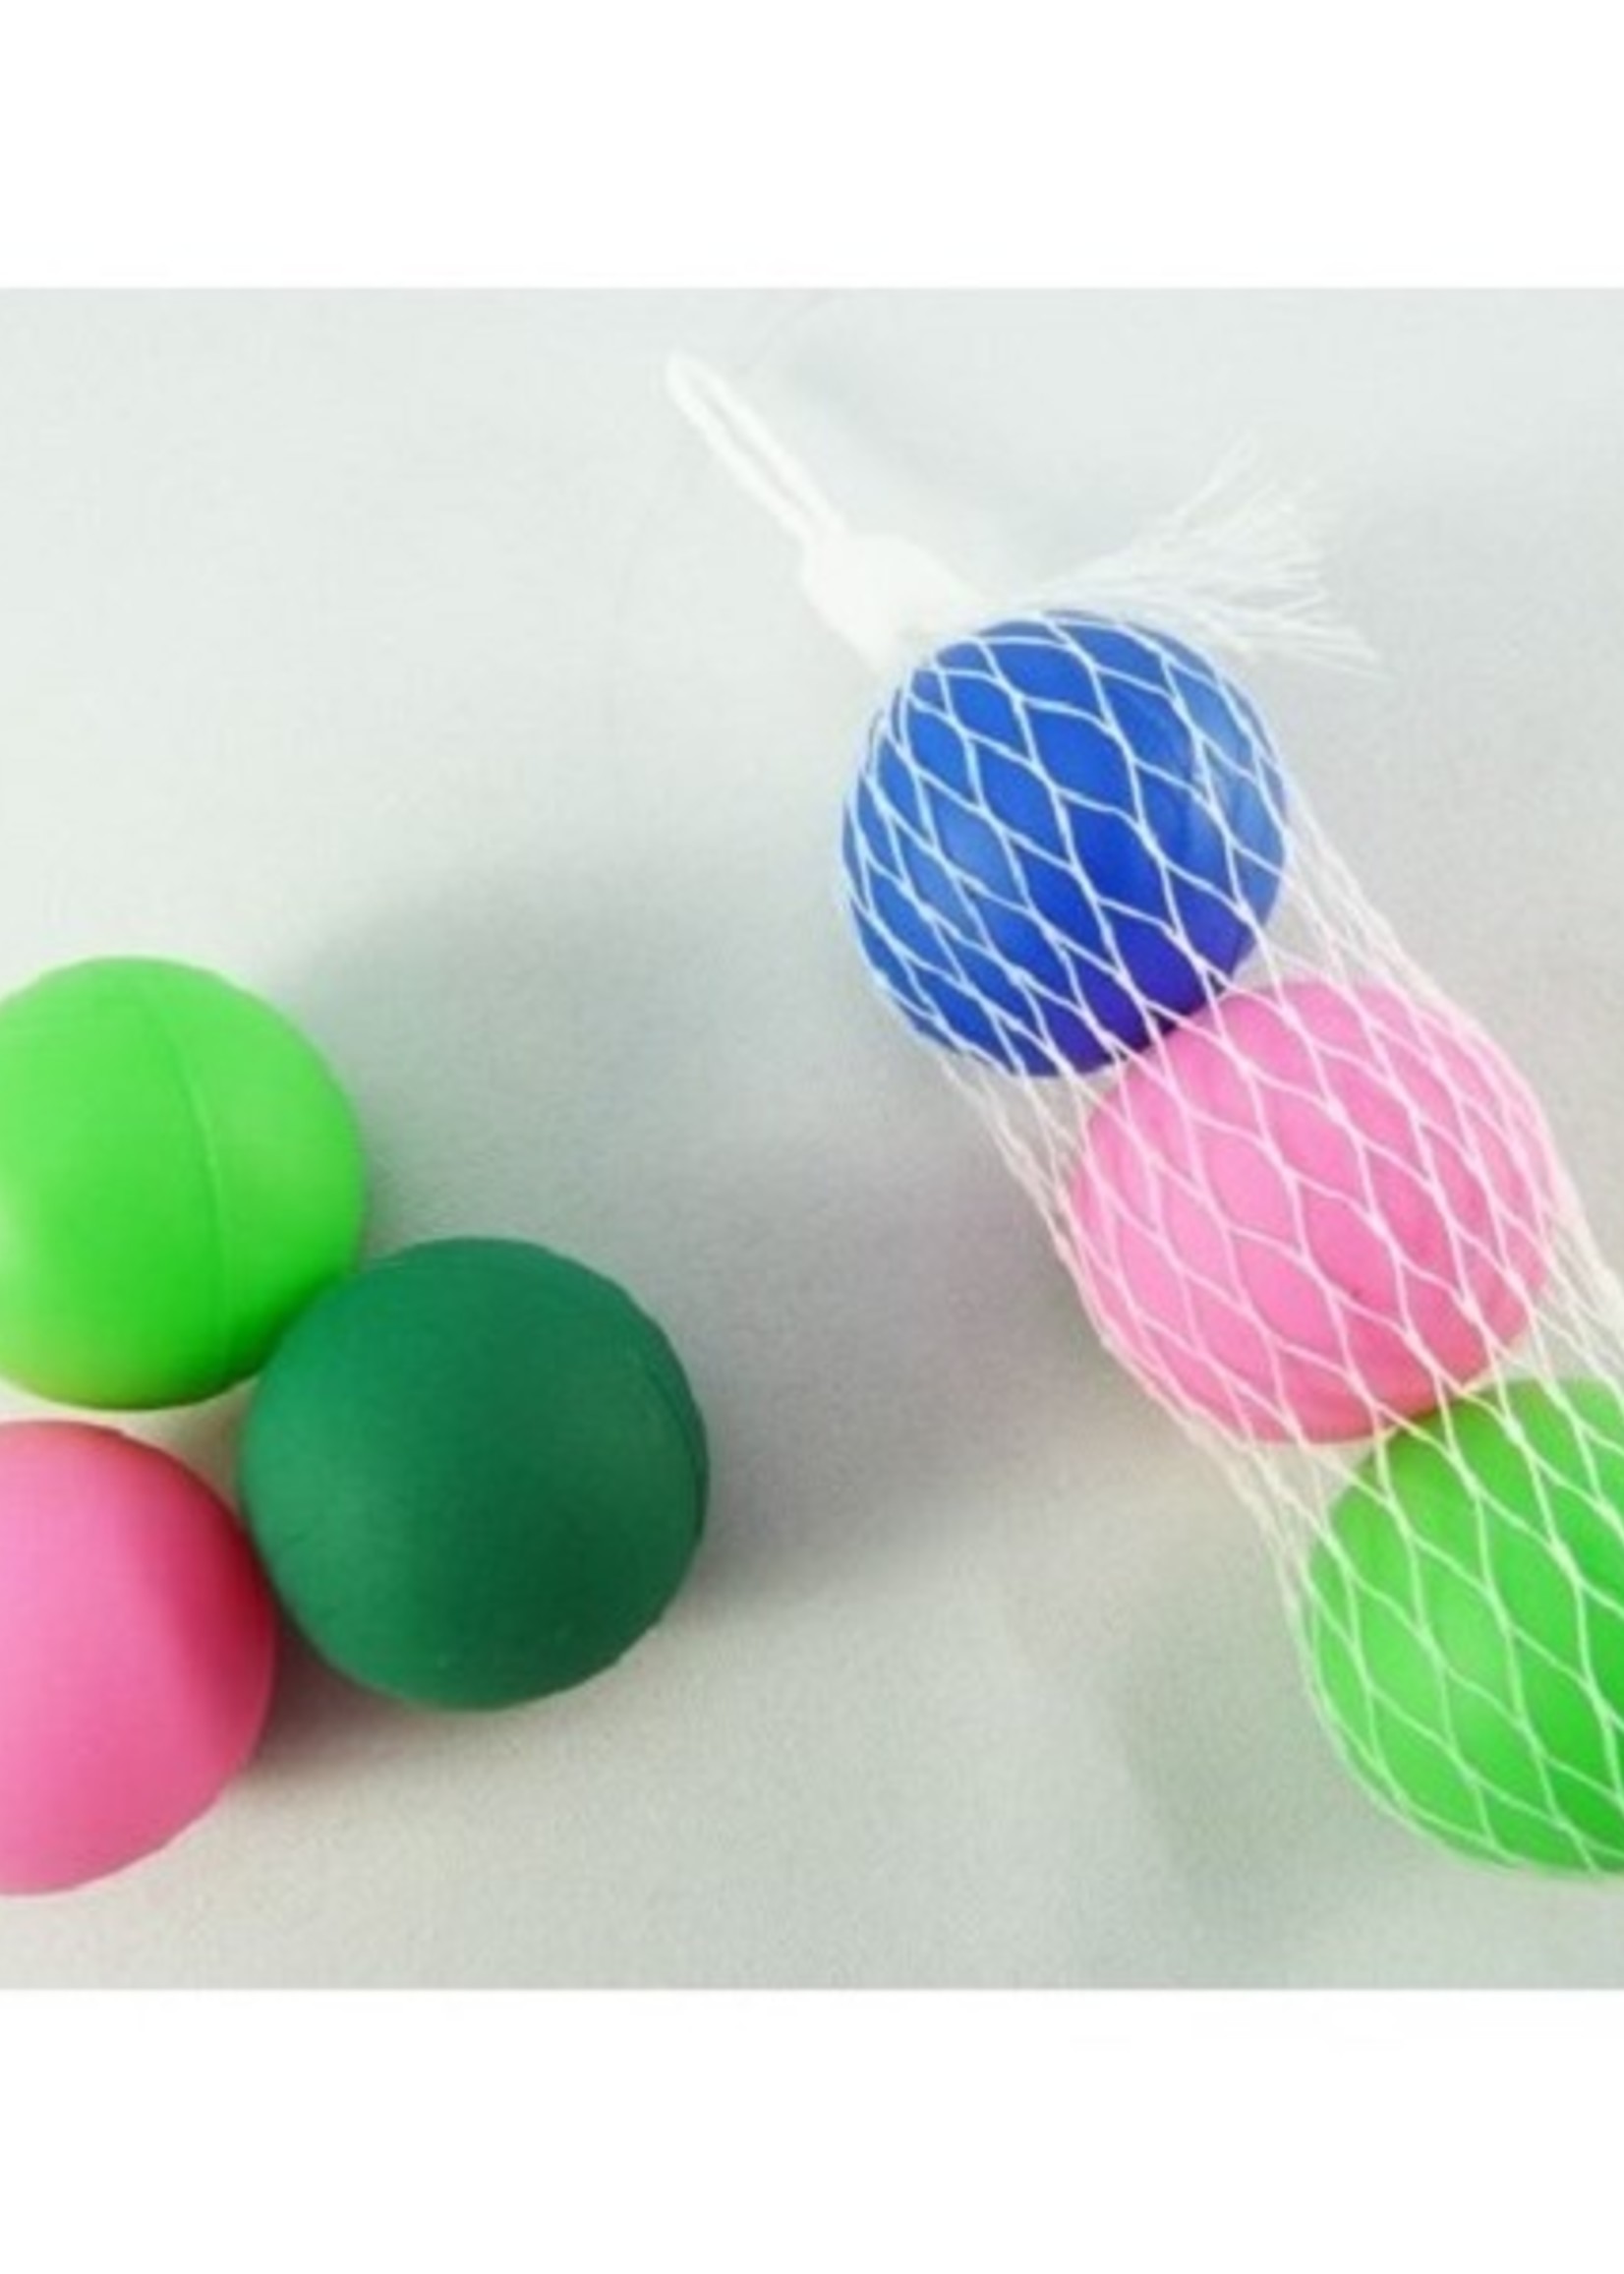 Beachballballetjes 40mm netje a 3st assorti kleuren